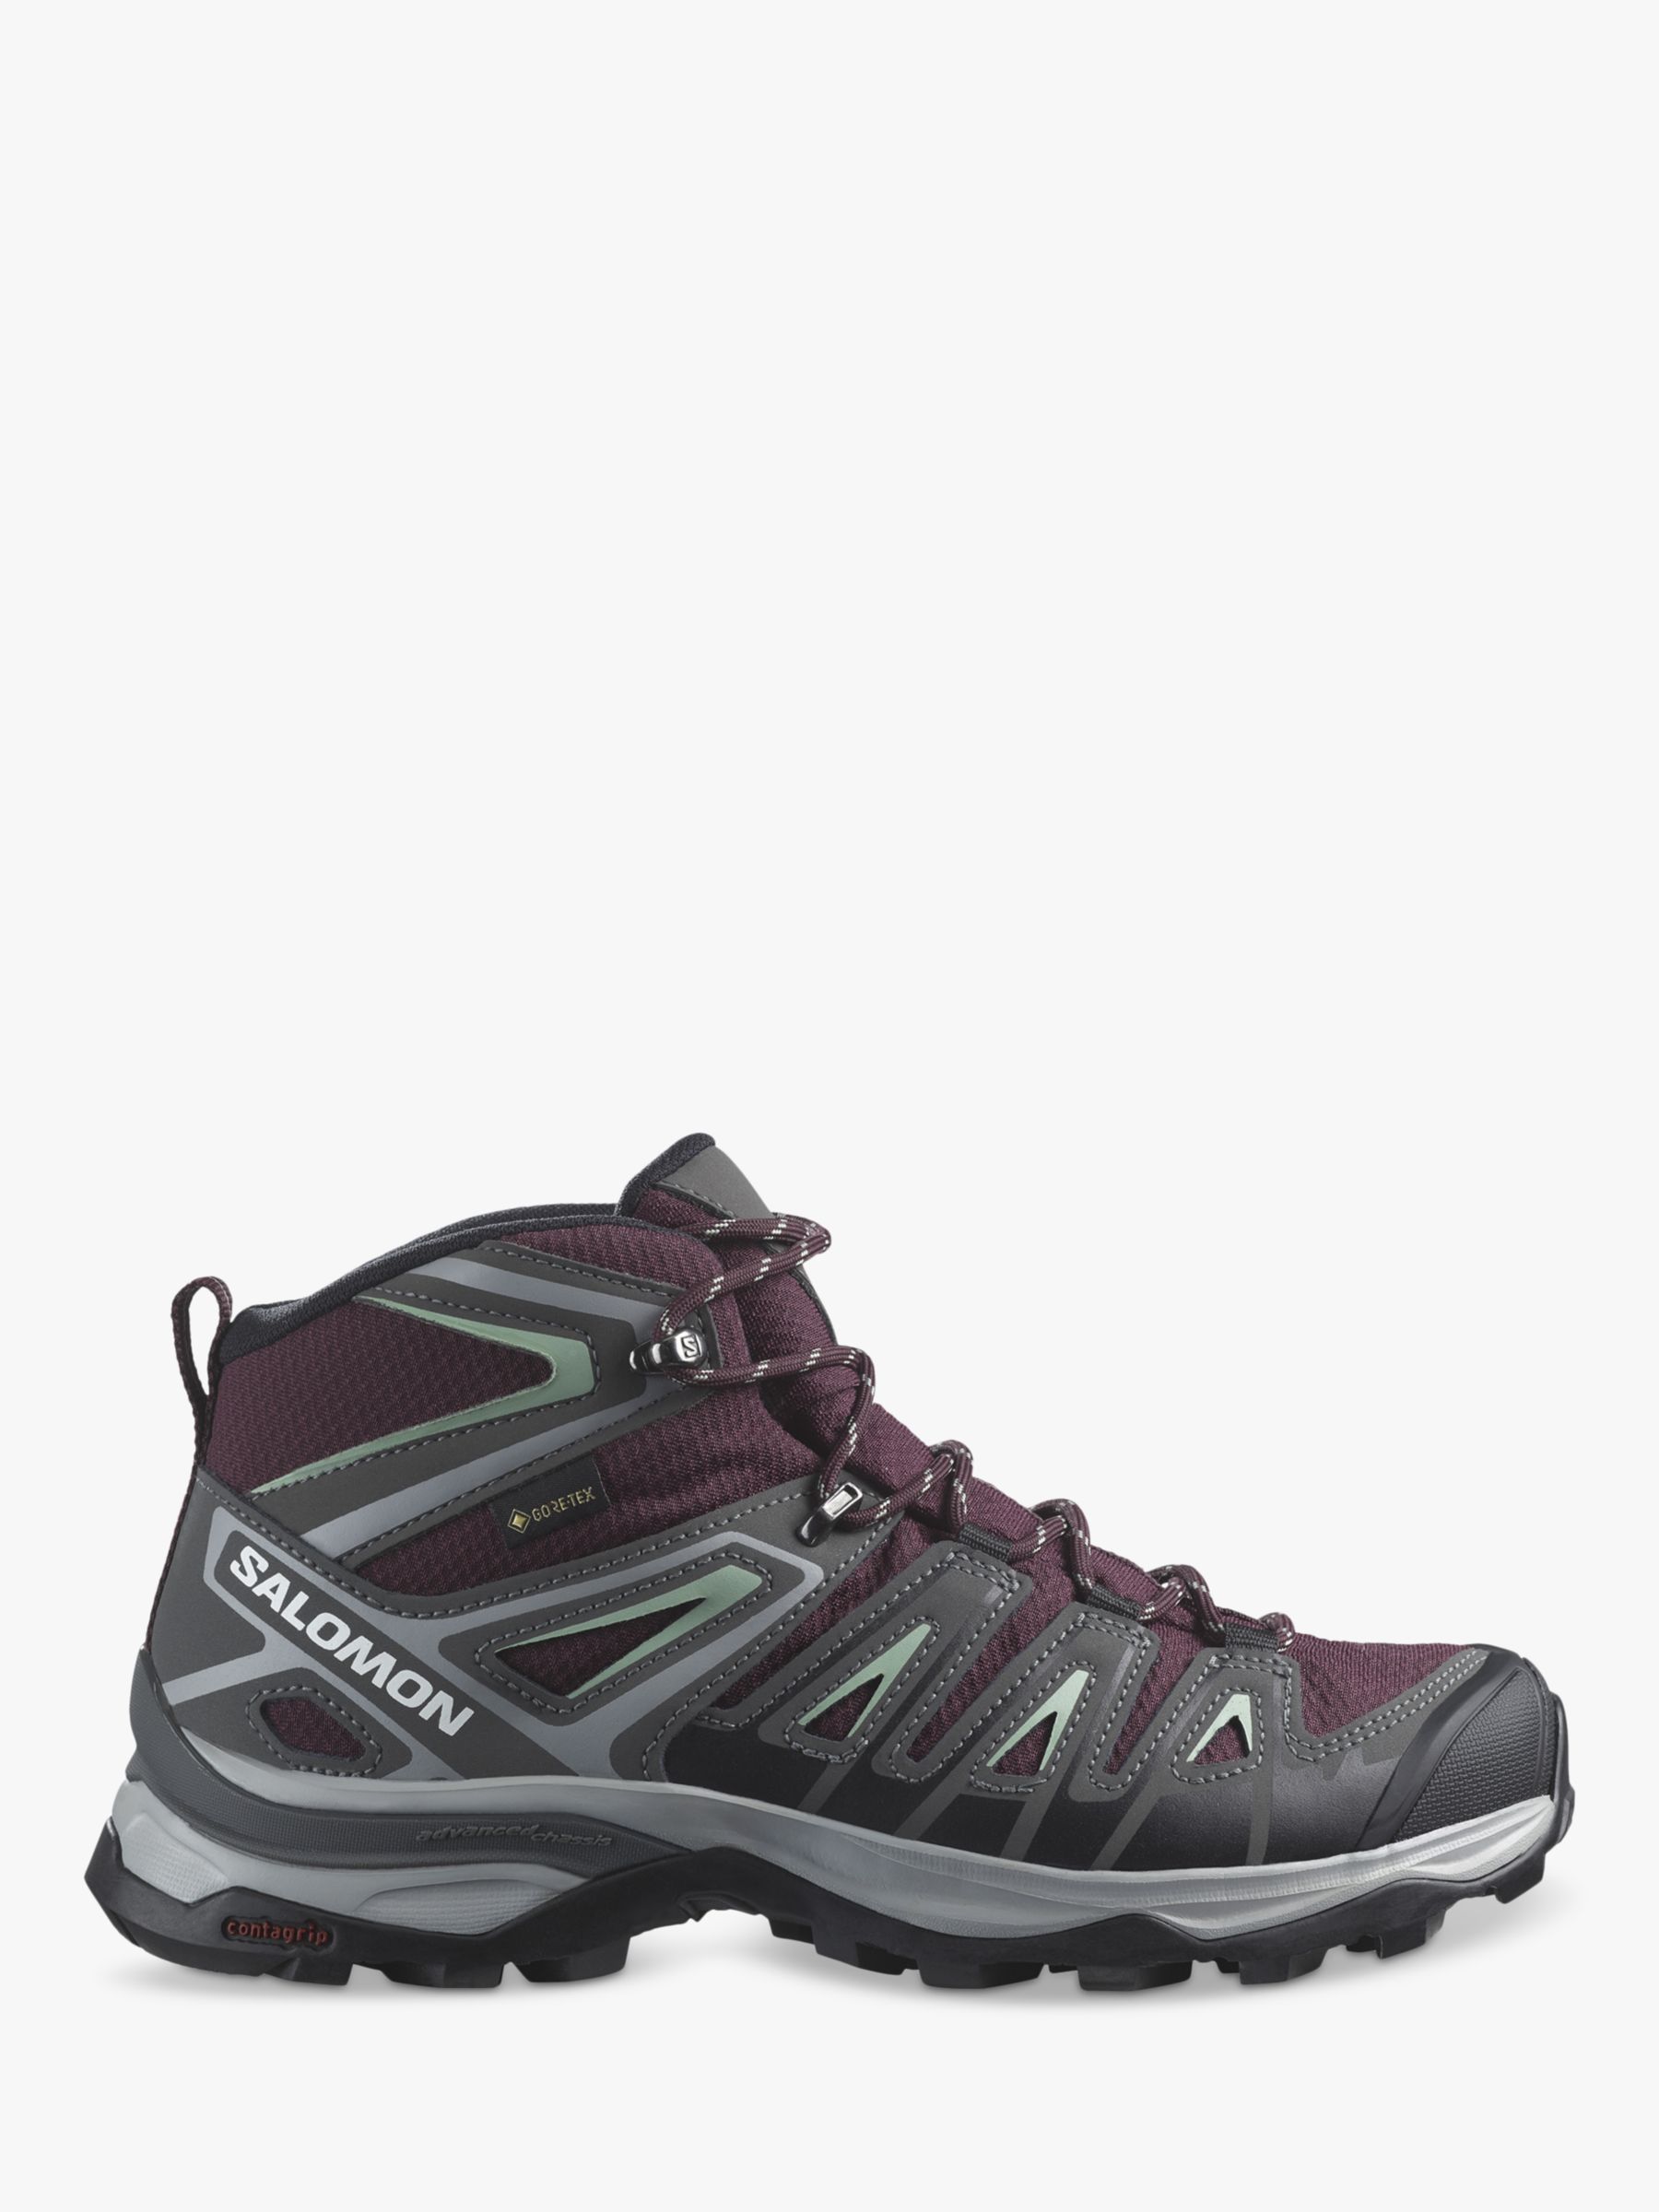 Salomon X Ultra Pioneer Mid Women's Waterproof Gore-Tex Hiking Boots, Magnet/ Green at Lewis & Partners